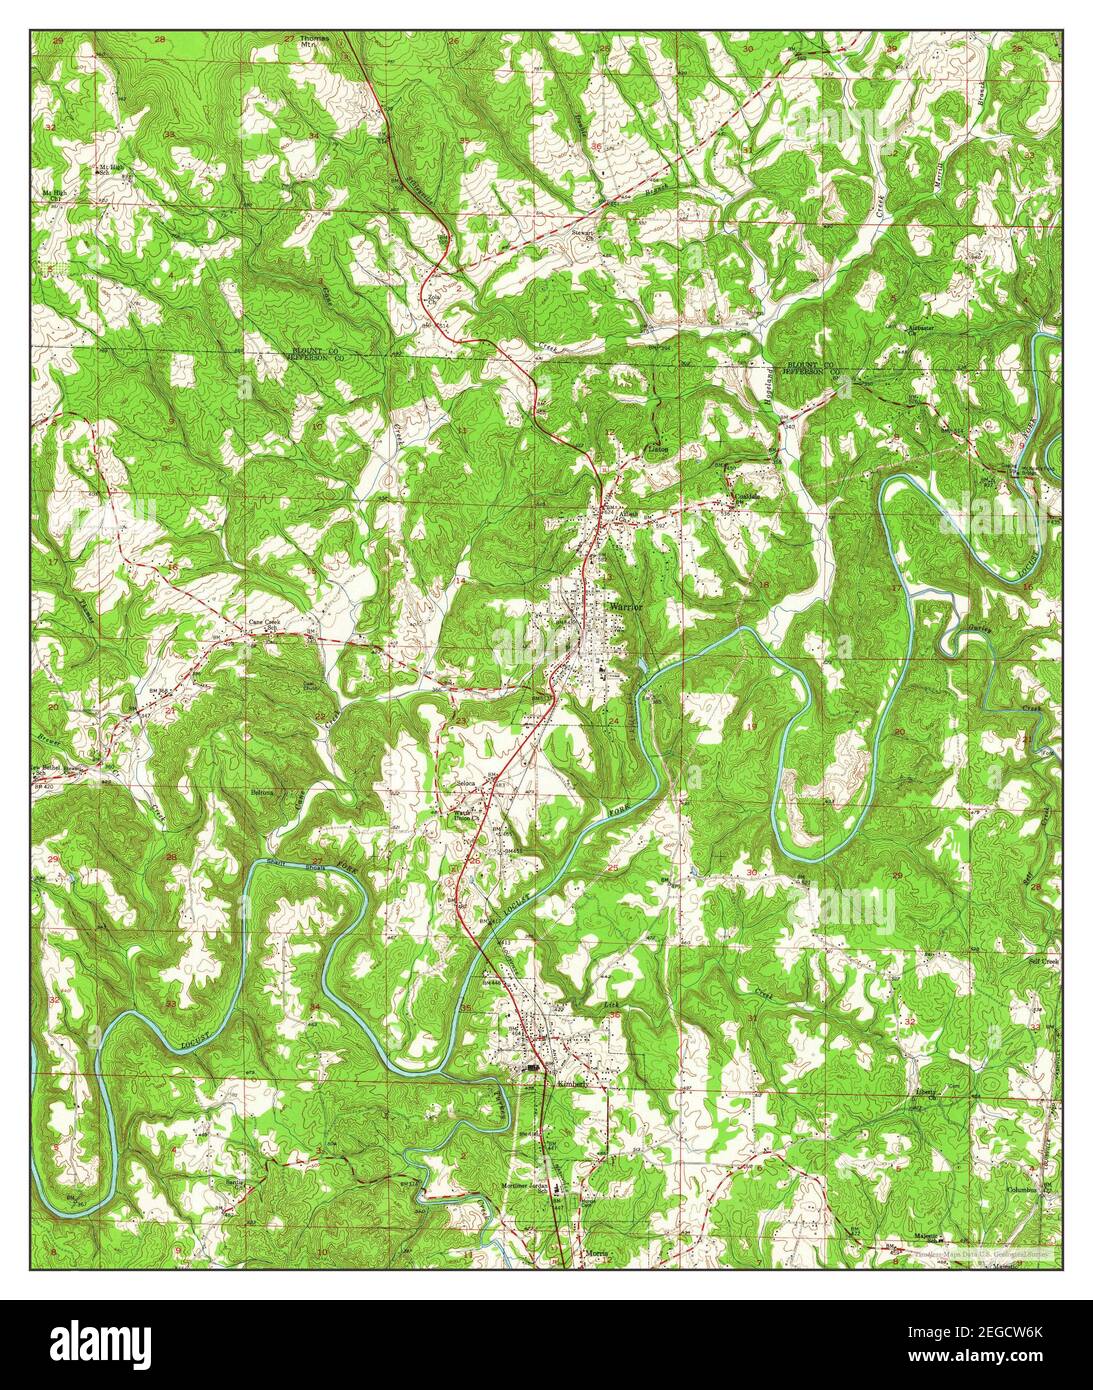 Warrior, Alabama, map 1951, 1:24000, United States of America by Timeless Maps, data U.S. Geological Survey Stock Photo